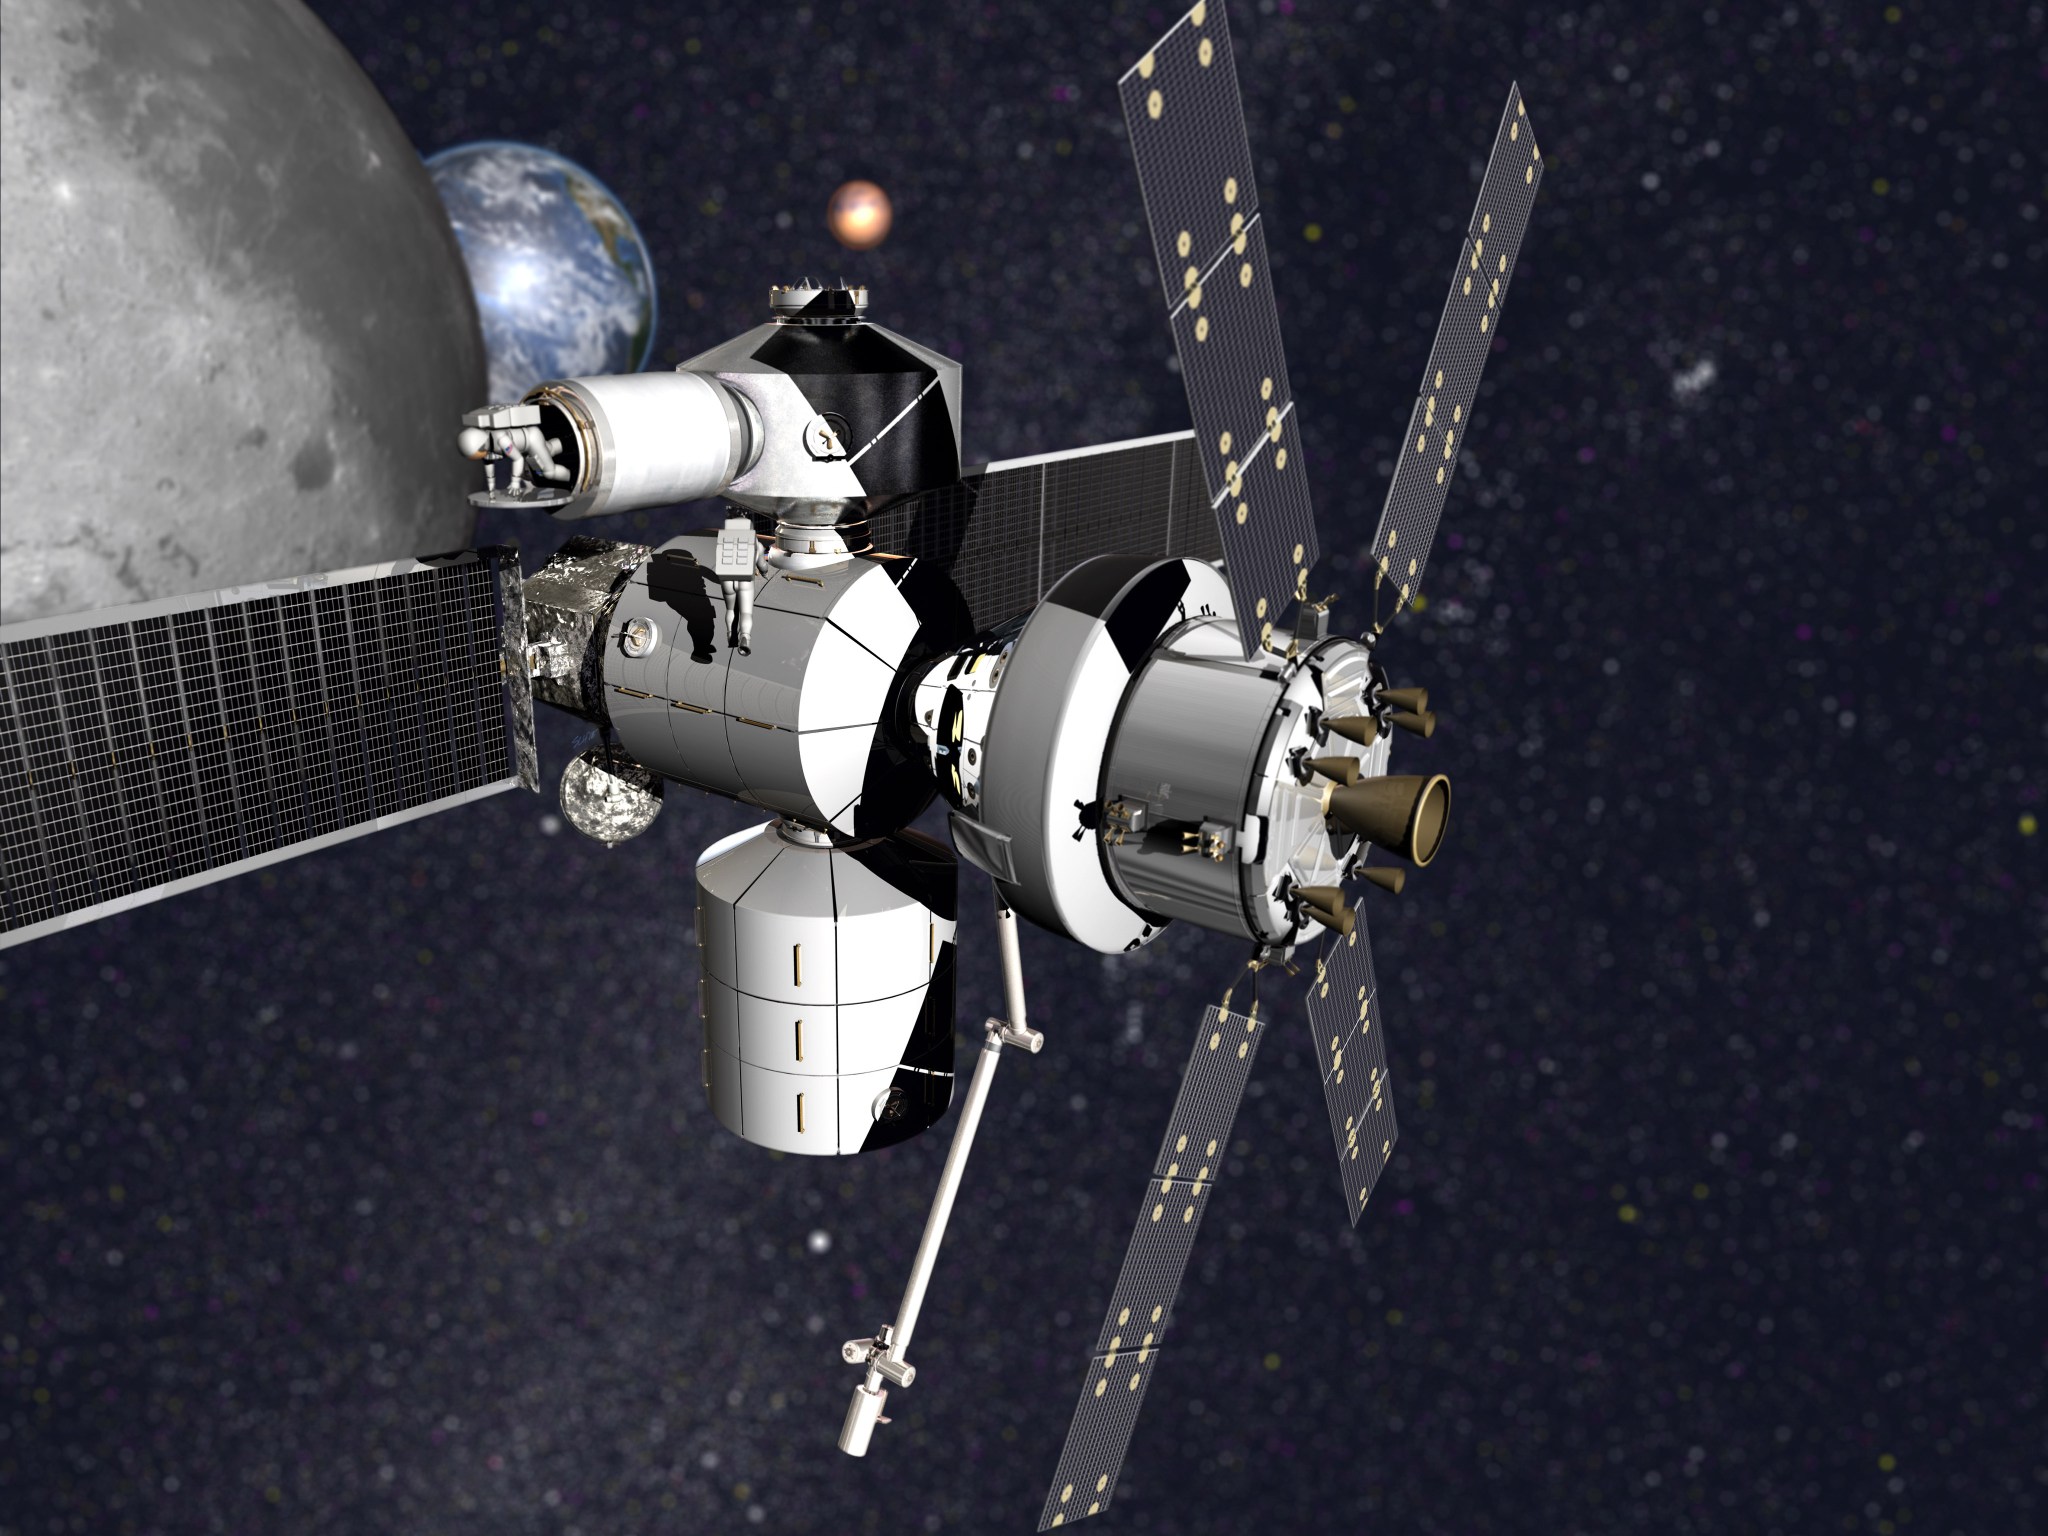 Concept image of Lockheed Martin's refurbished multi-purpose logistics module prototype